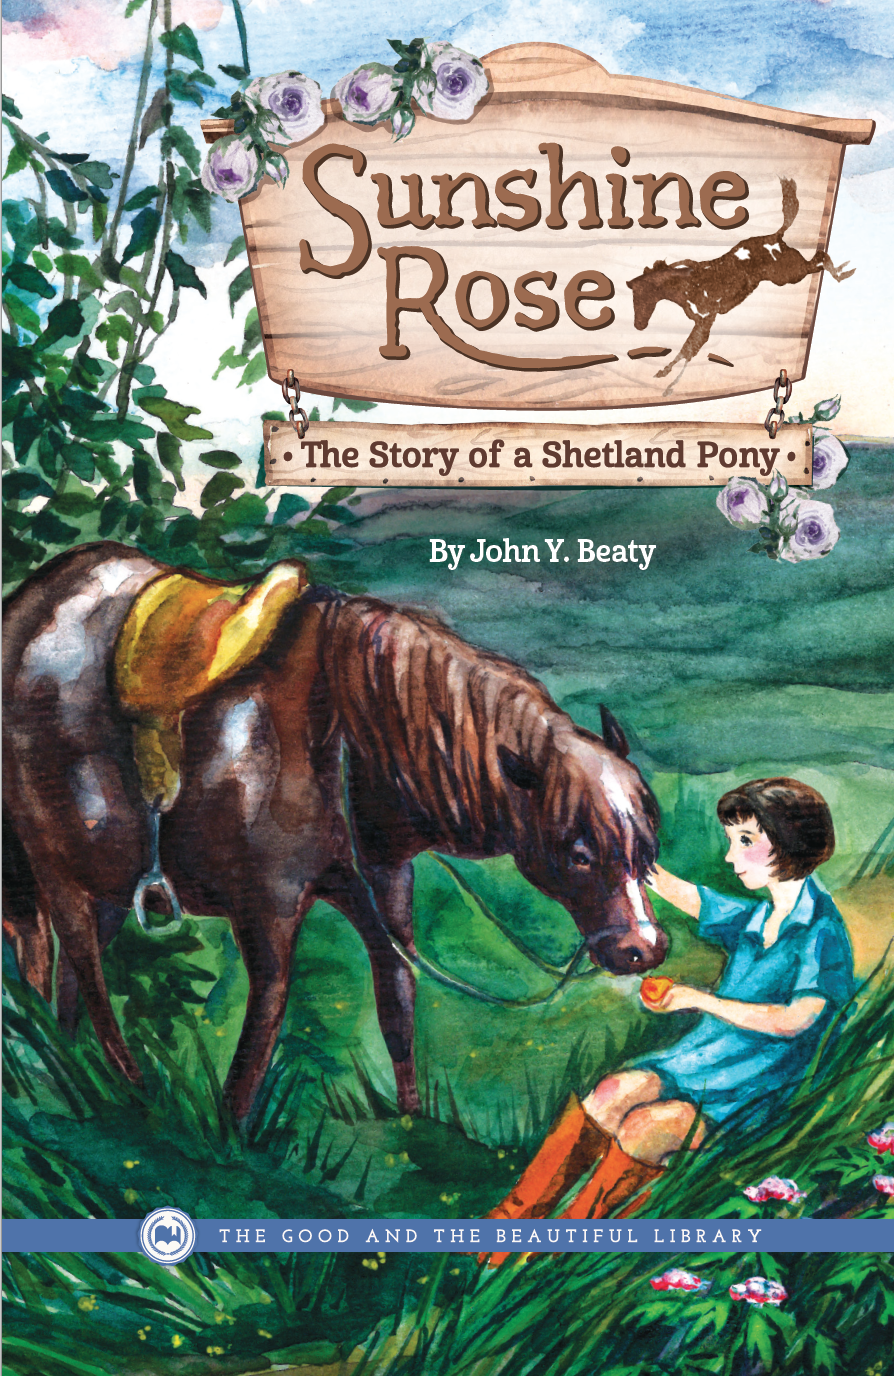 Sunshine Rose—The Story of a Shetland Pony